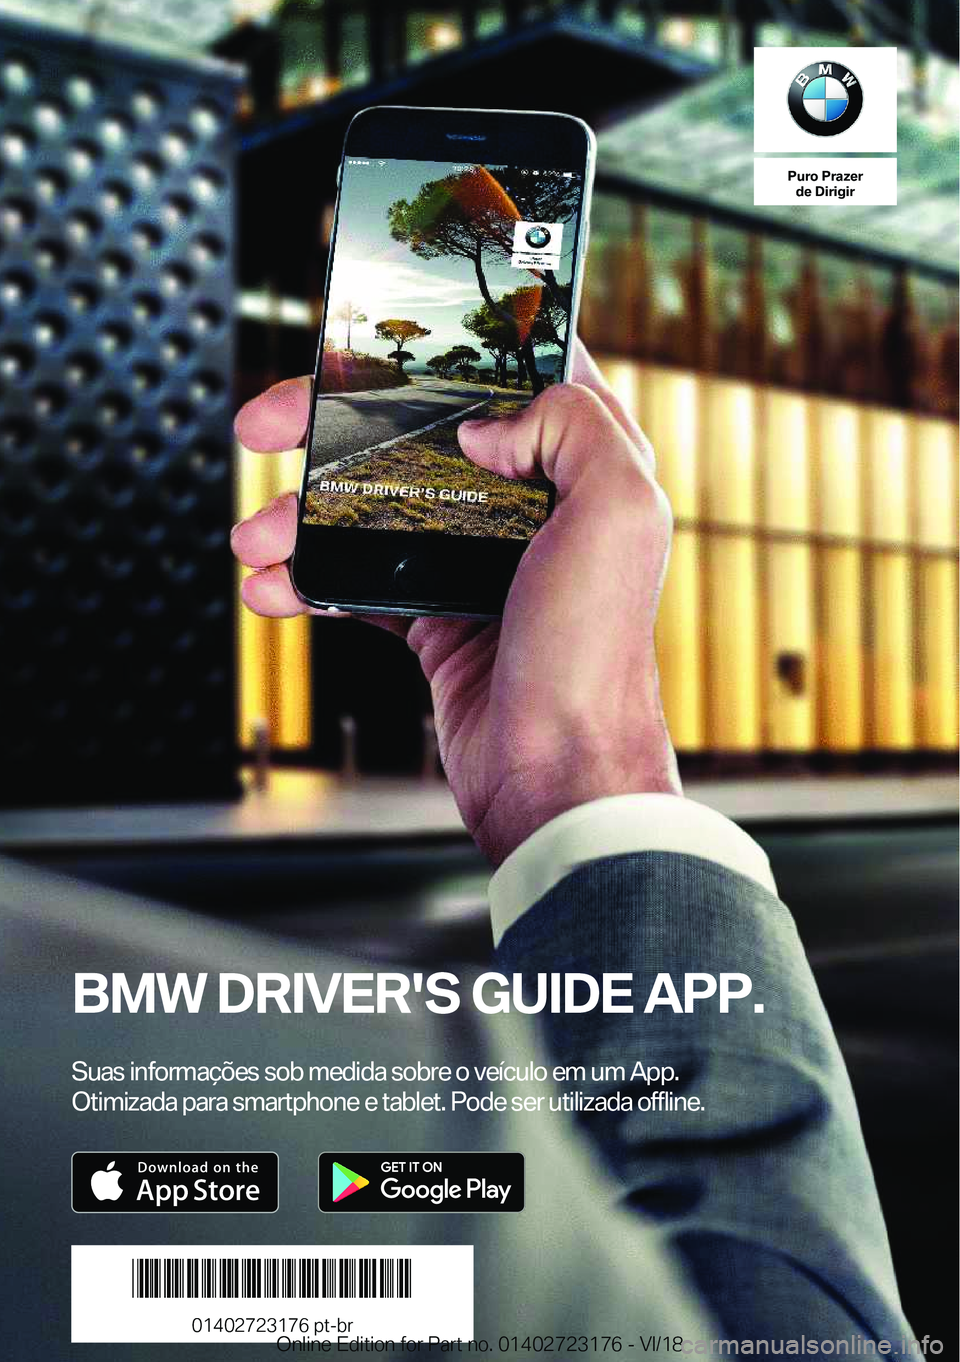 BMW 4 SERIES GRAN COUPE 2019  Manual do condutor (in Portuguese) �P�u�r�o��P�r�a�z�e�r�d�e��D�i�r�i�g�i�r
�B�M�W��D�R�I�V�E�R�'�S��G�U�I�D�E��A�P�P�.
�S�u�a�s��i�n�f�o�r�m�a�